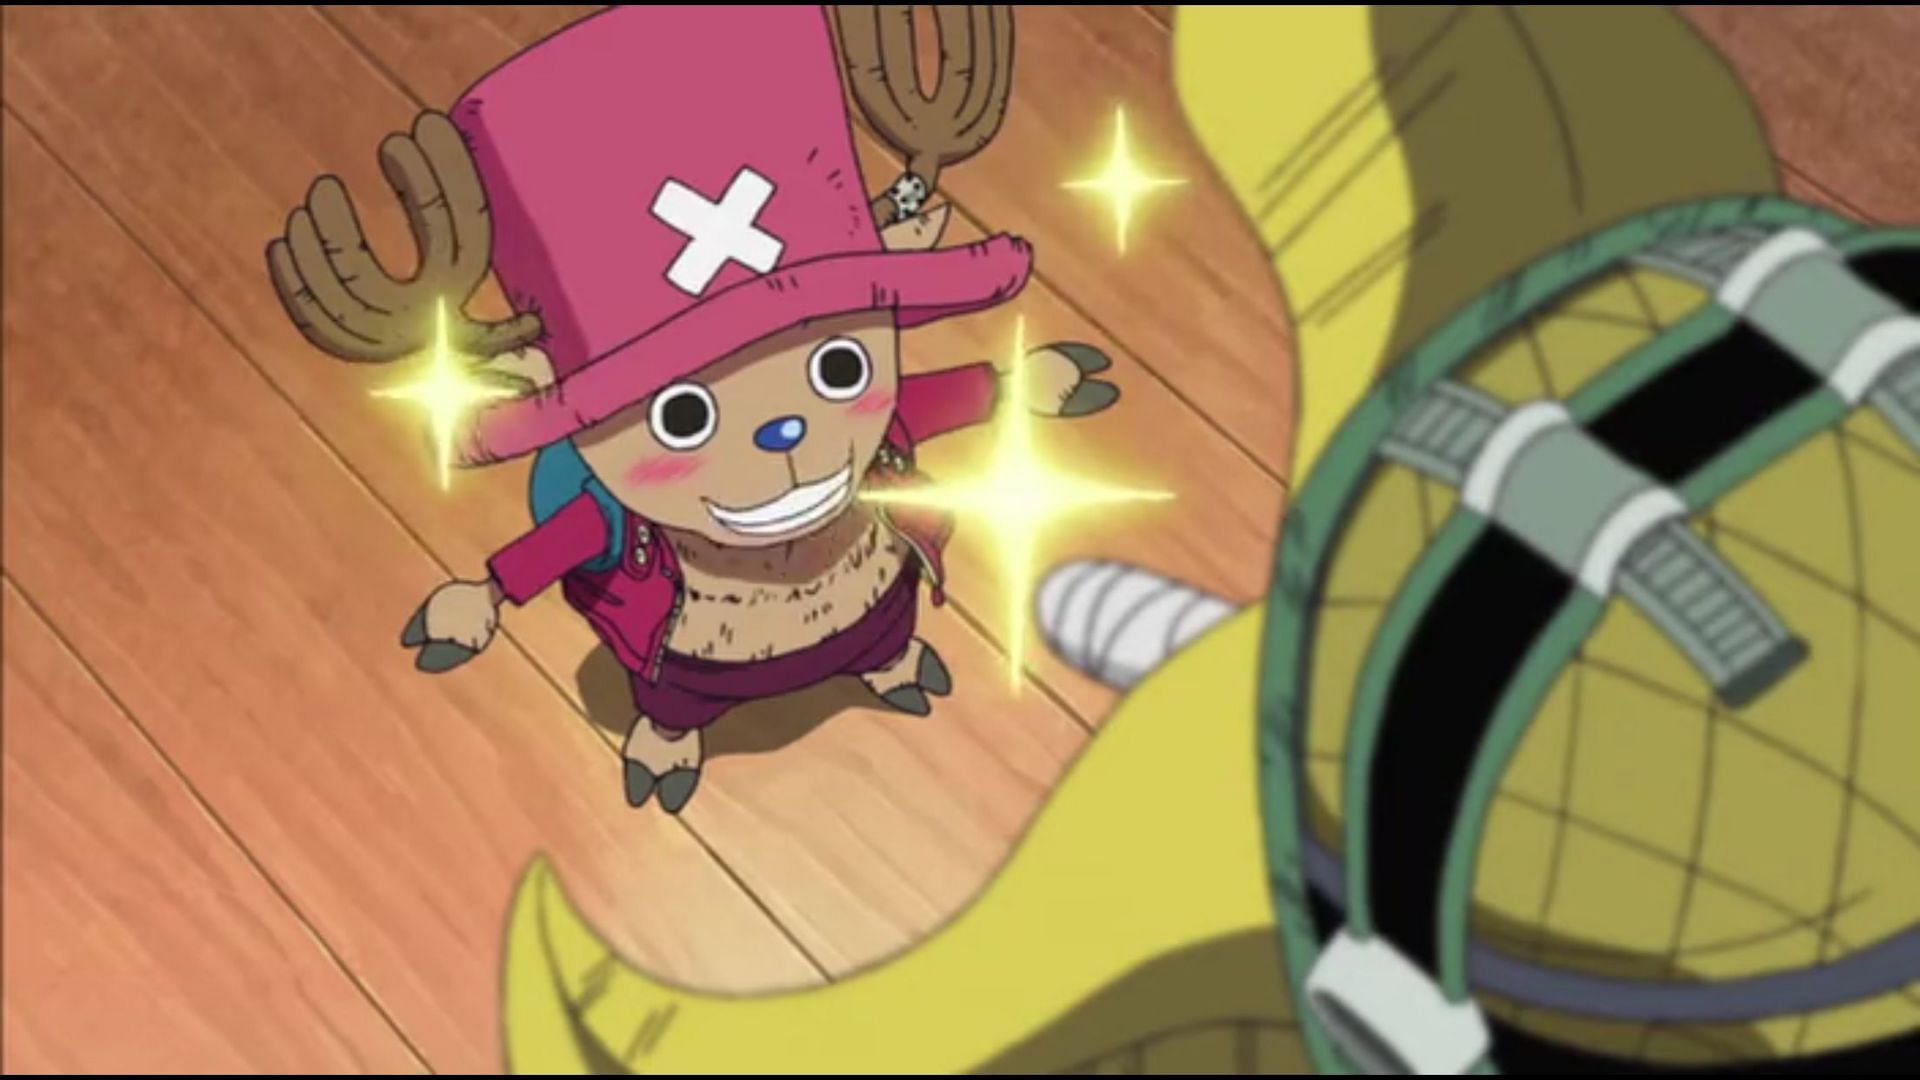 Tony Tony Chopper as shown in One Piece anime (Image via Toei Animation)